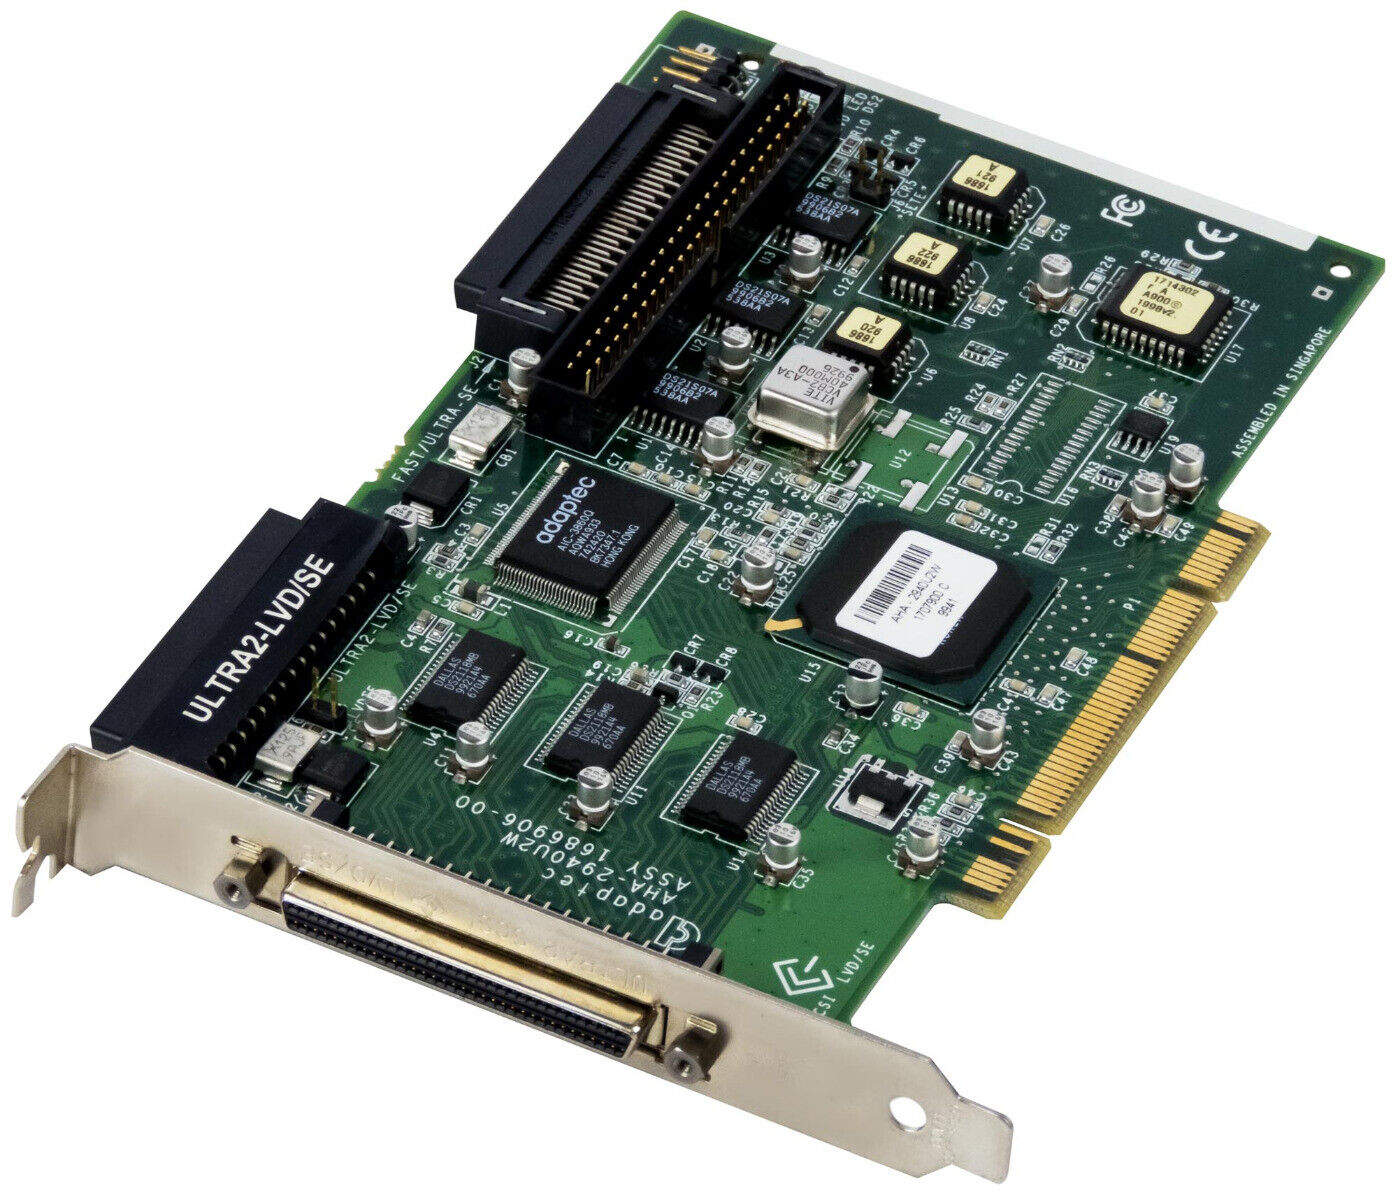 ADAPTEC AHA-2940U2W SCSI PCI CONTROLLER